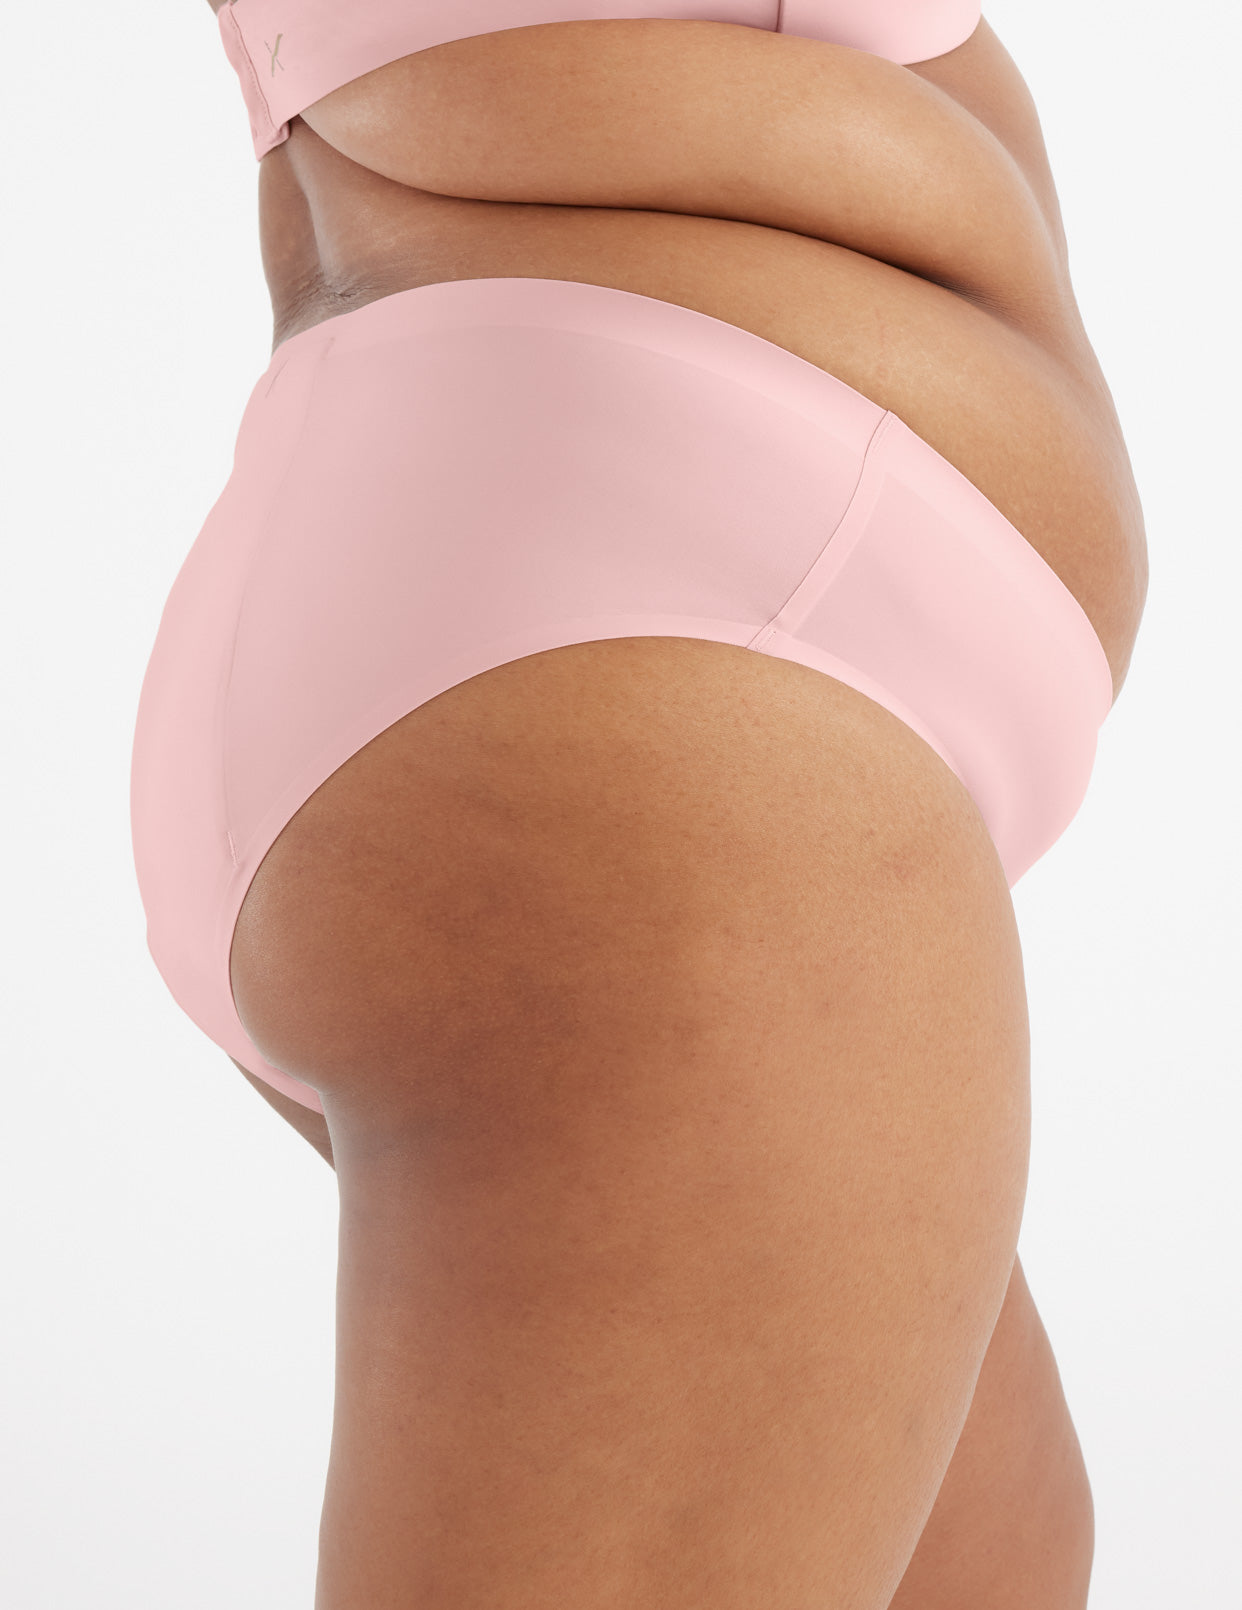 RUIXUE Womens Period Underwear Heavy Flow Menstrual Period Panties  Leak-Proof Hipster Panty for Female Teens Girls 3 Pack